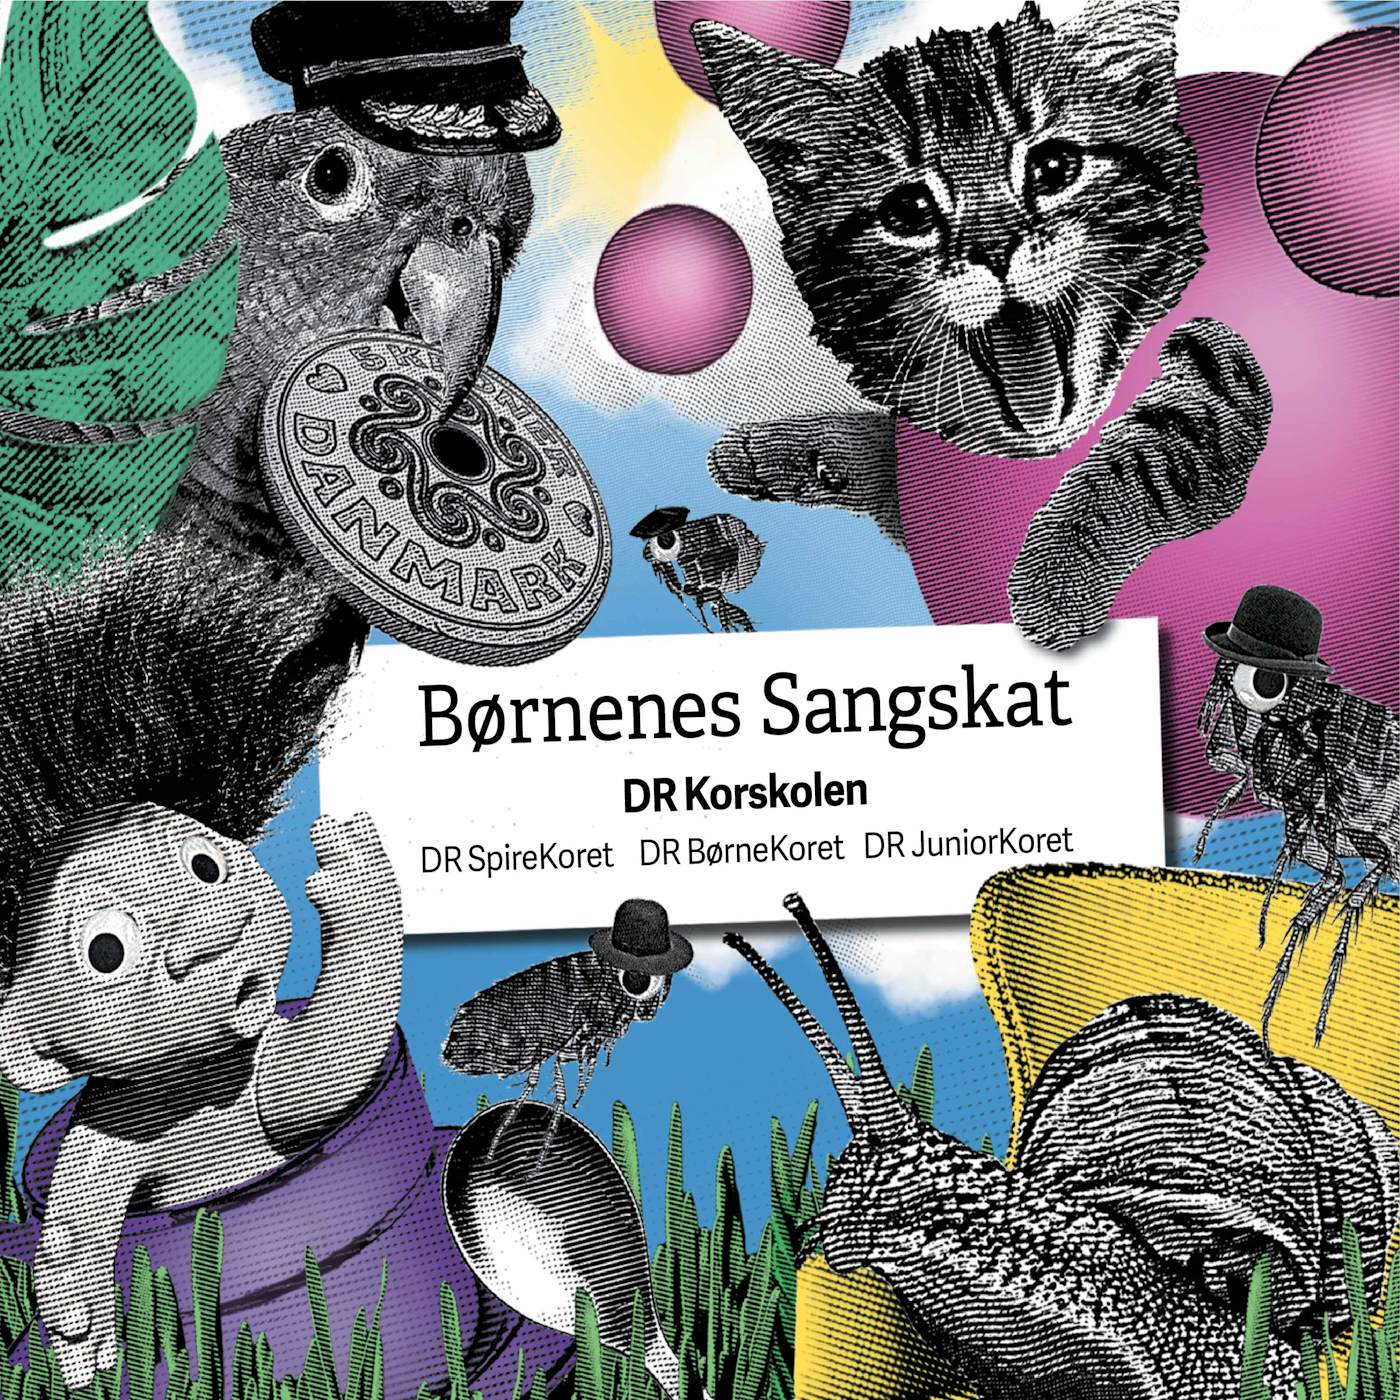 SebastiAn BORNENES SANGSKAT CD